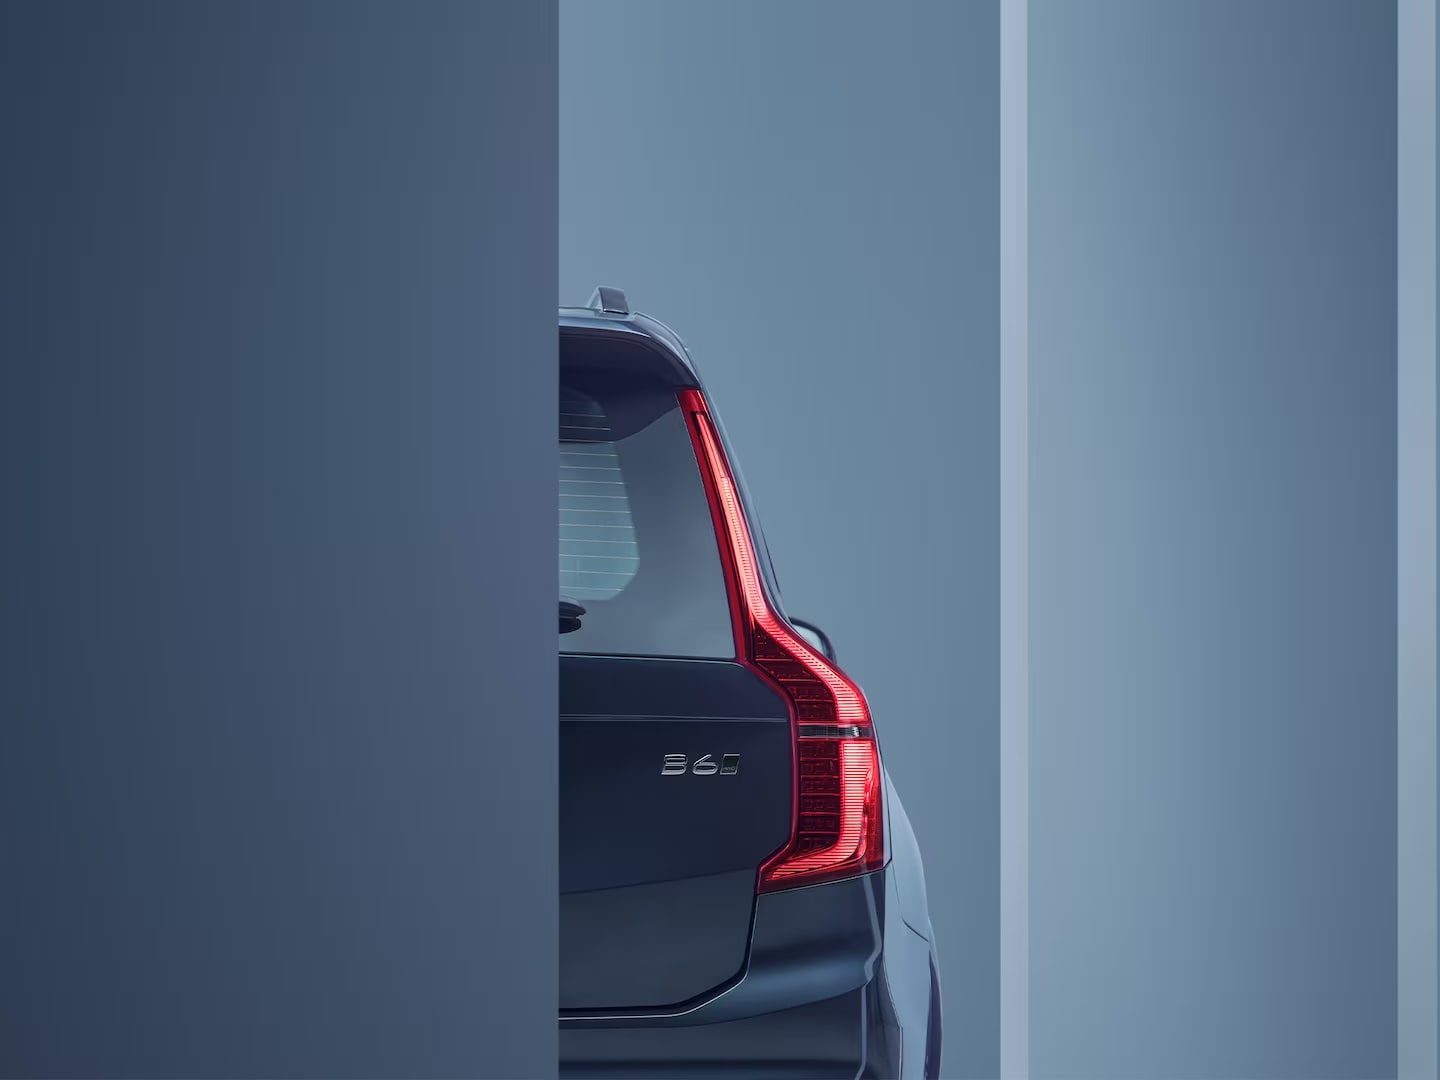 Детали дизайна задних фонарей мягкого гибрида Volvo XC90.